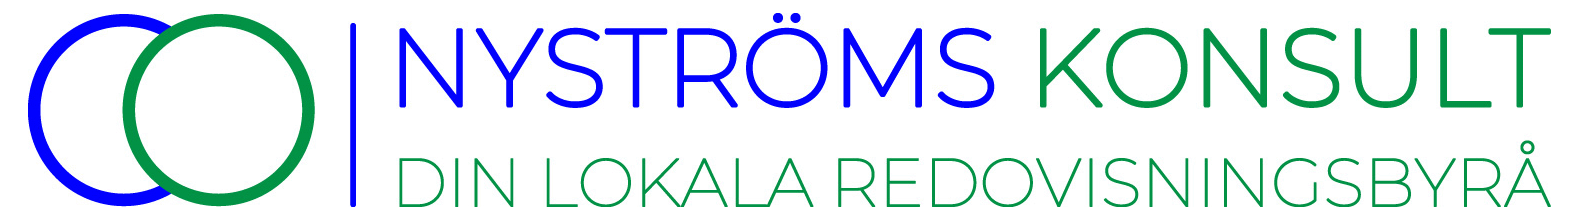 Nyströms konsult logotype